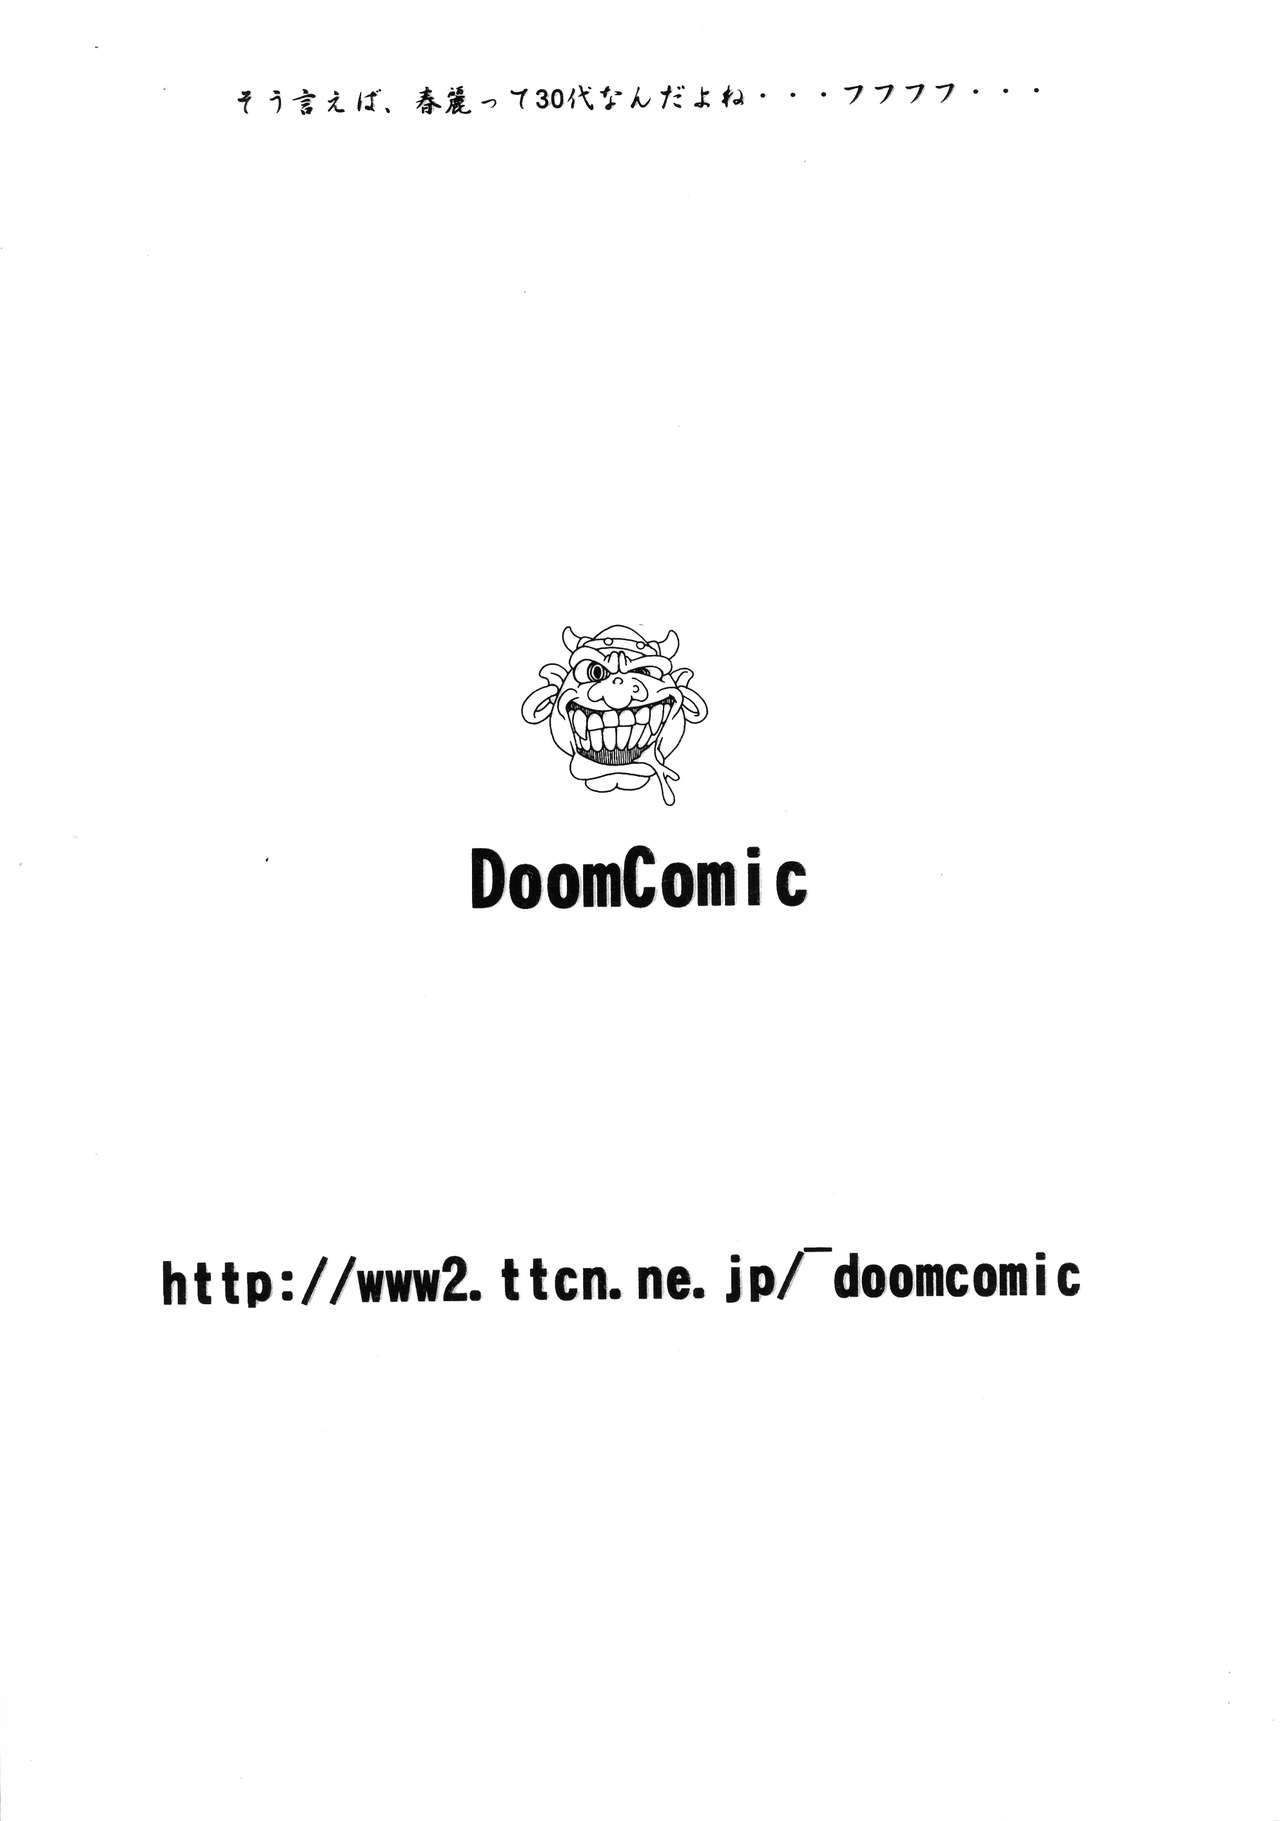 (C58) [DoomComic (信樂吟平)] We Love Morrigan EX (ヴァンパイア)